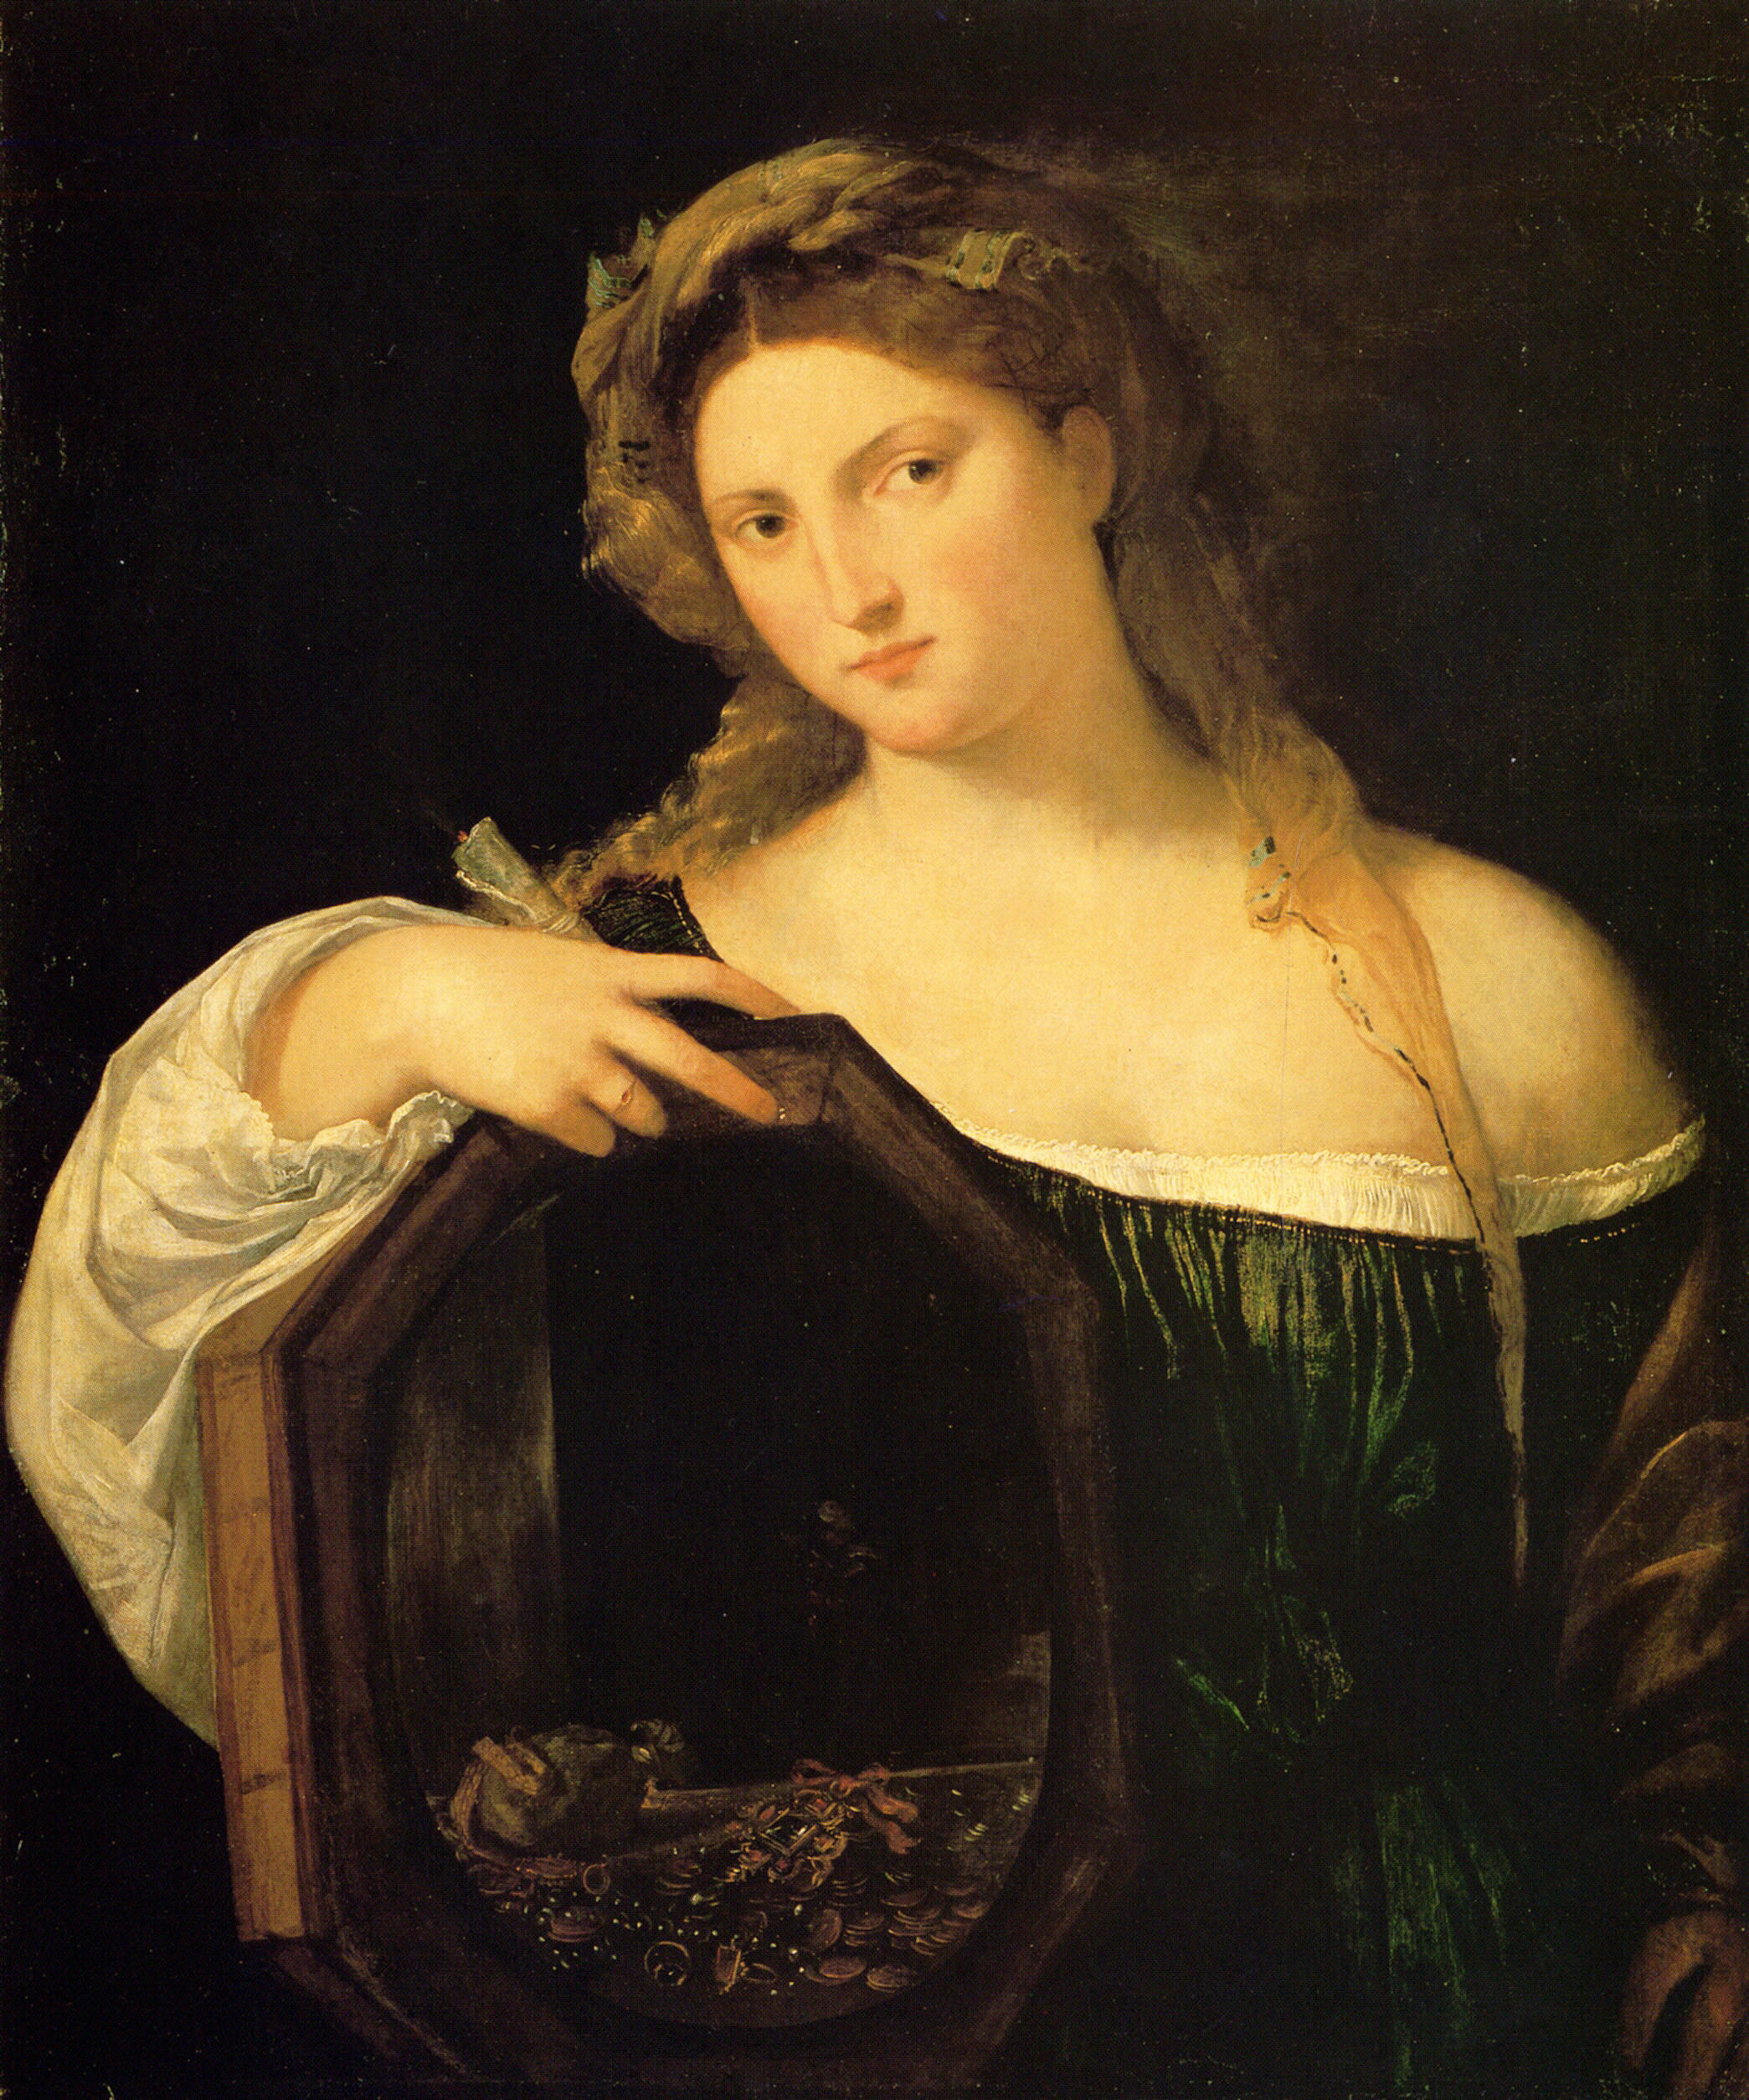 Amore profano by Tiziano Vecellio - 1515 - 65 x 51 cm Kunsthistorisches Museum